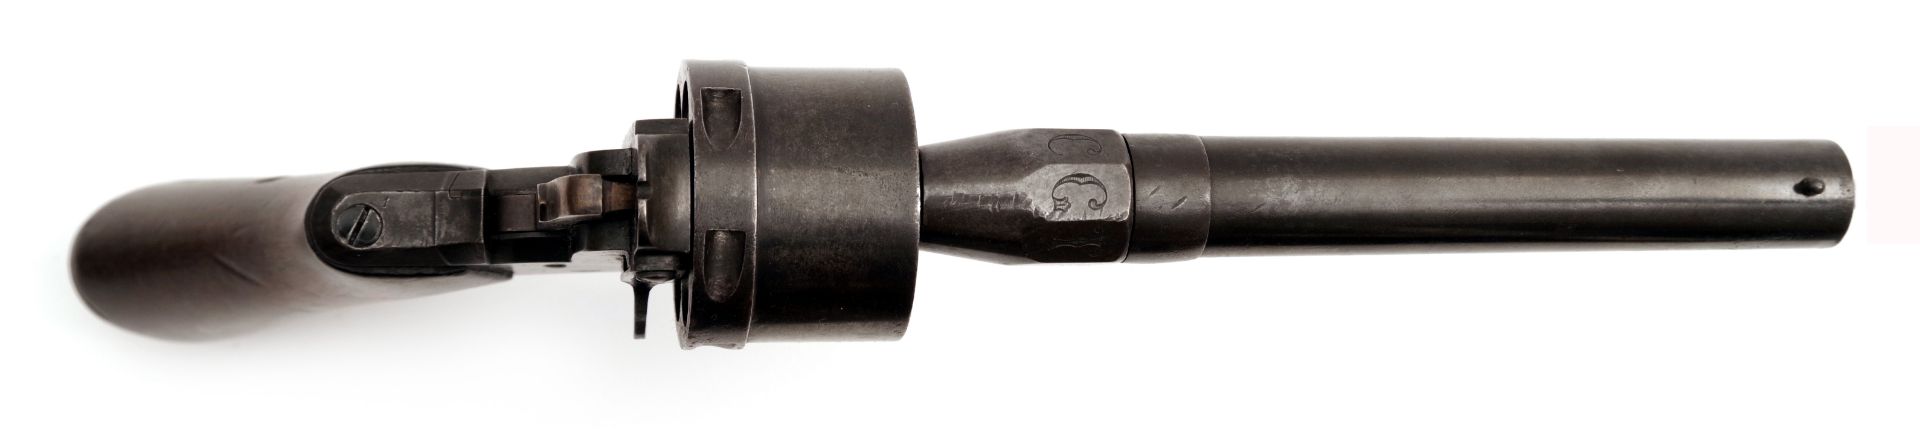 Revolver Perrin Modell 1859 - Bild 2 aus 5